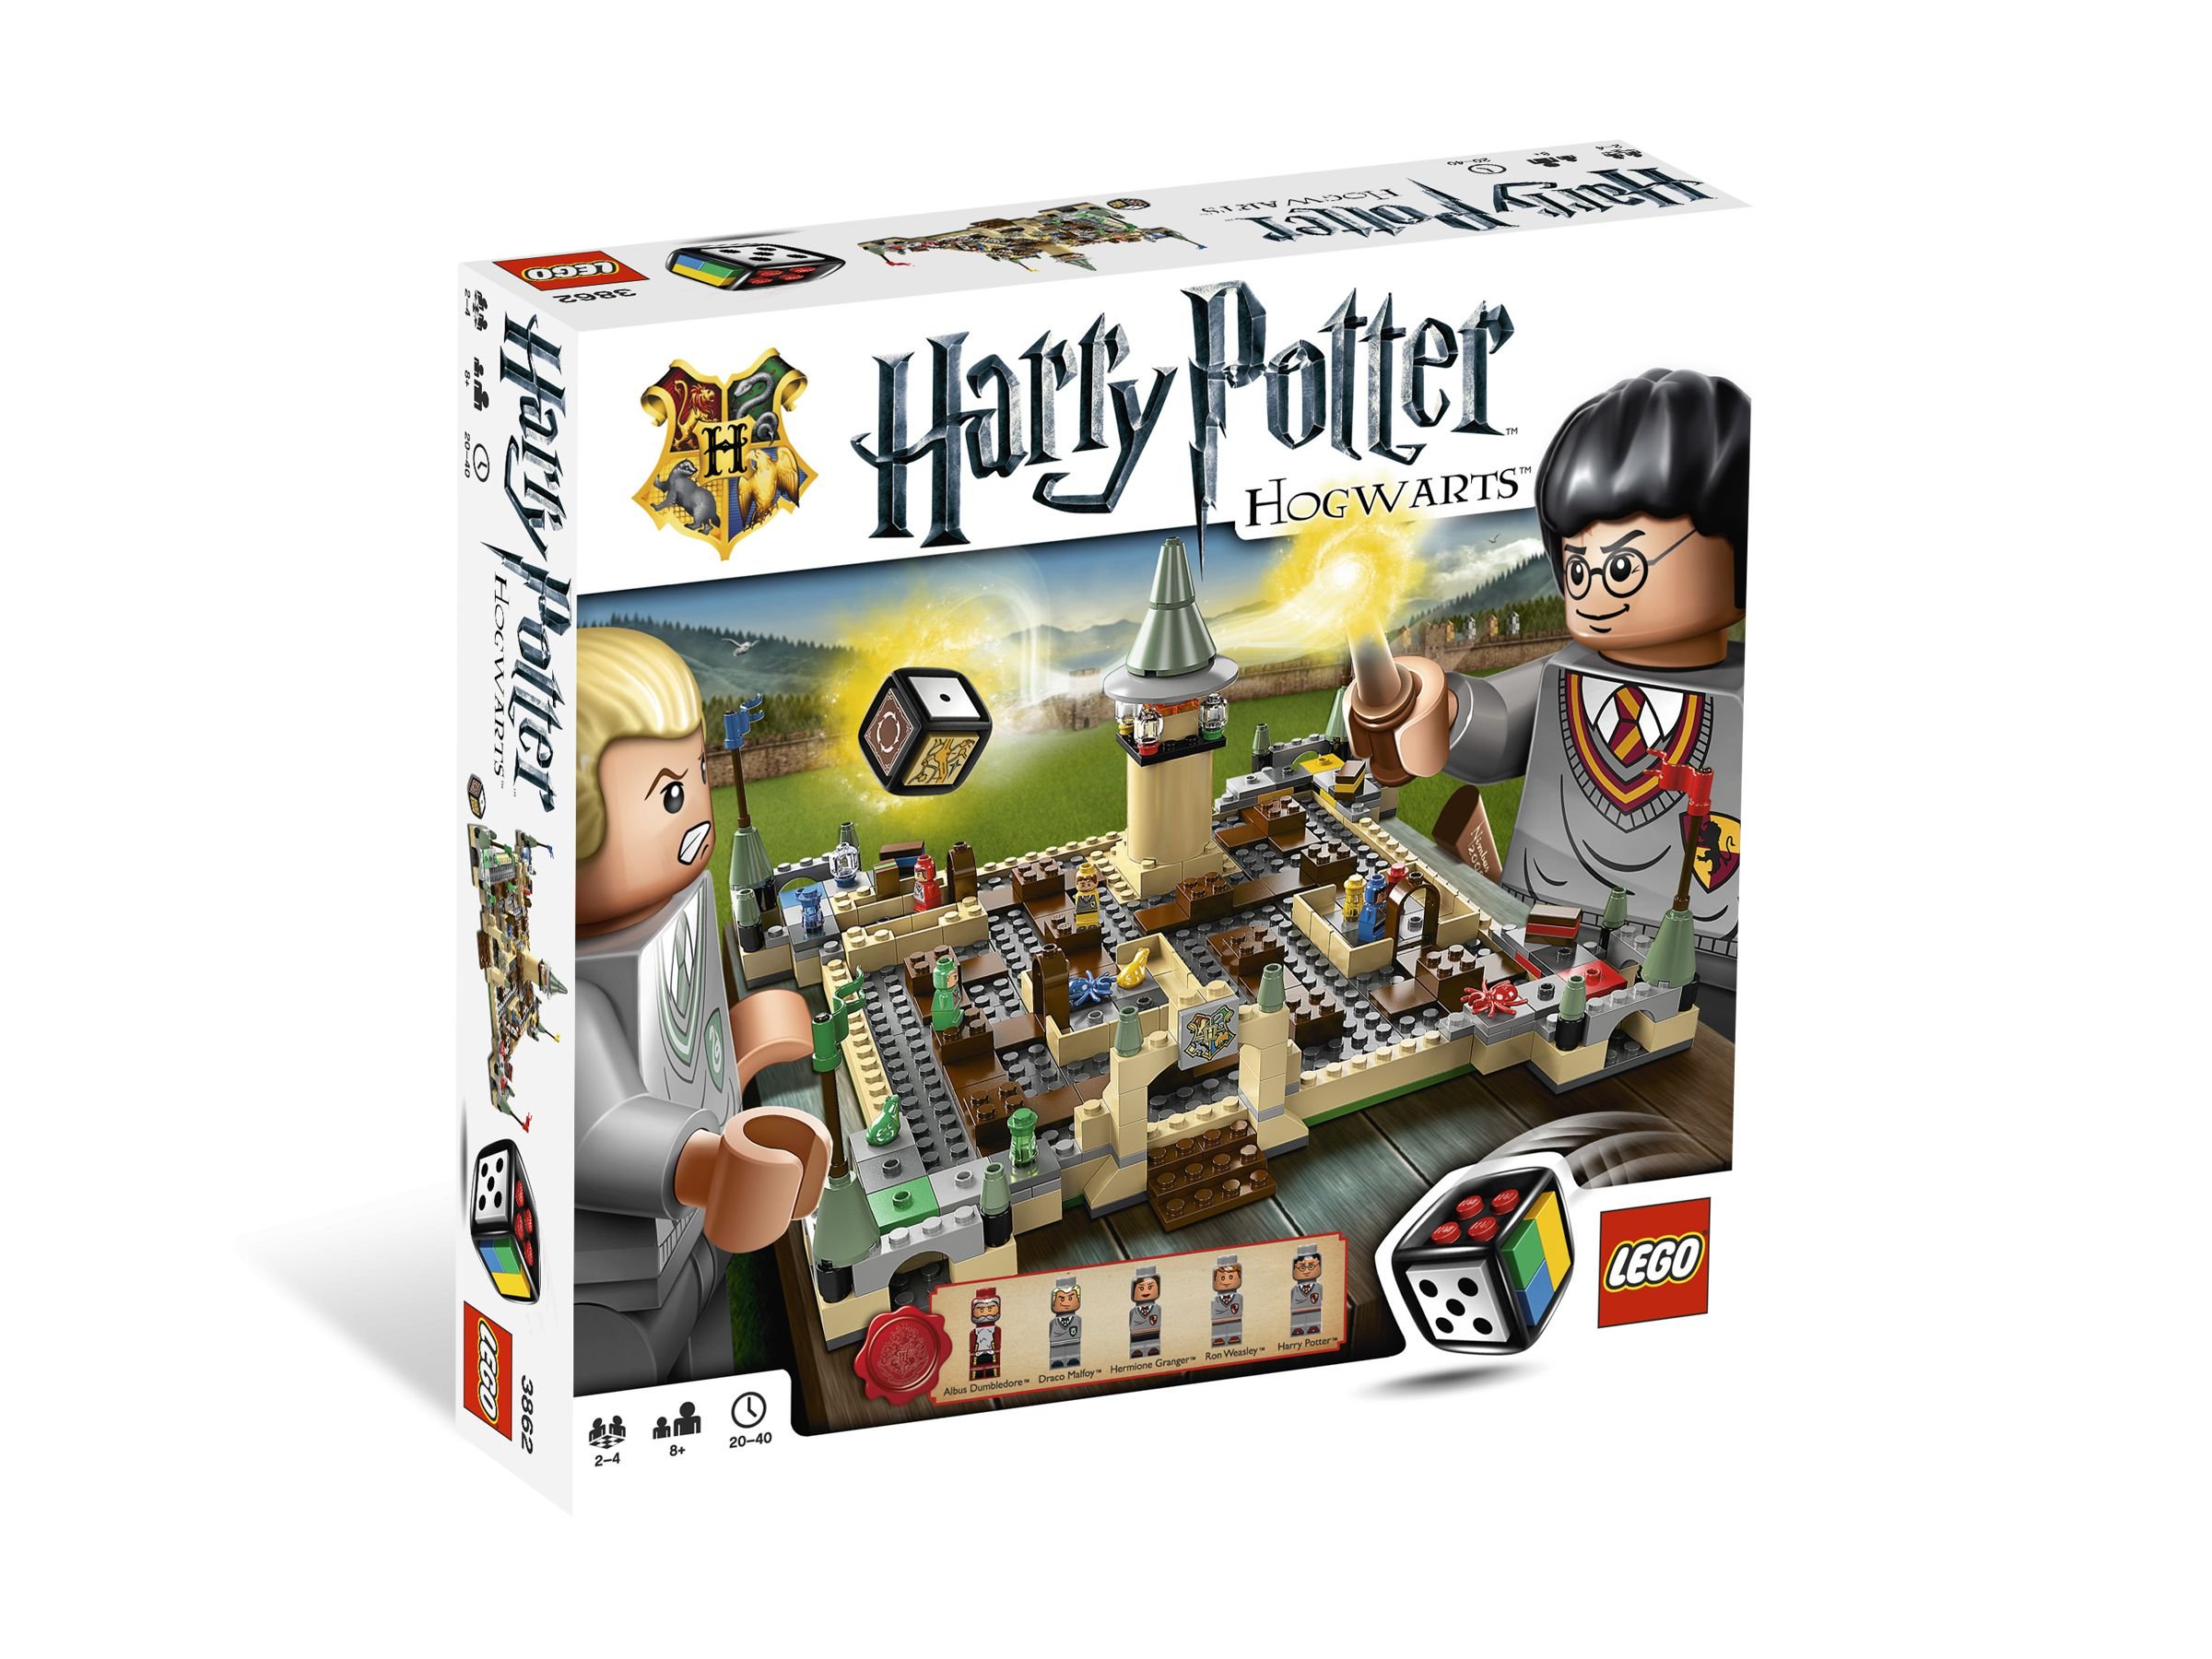 LEGO Games 3862 Harry Potter™ Hogwarts™ LEGO_3862.jpg